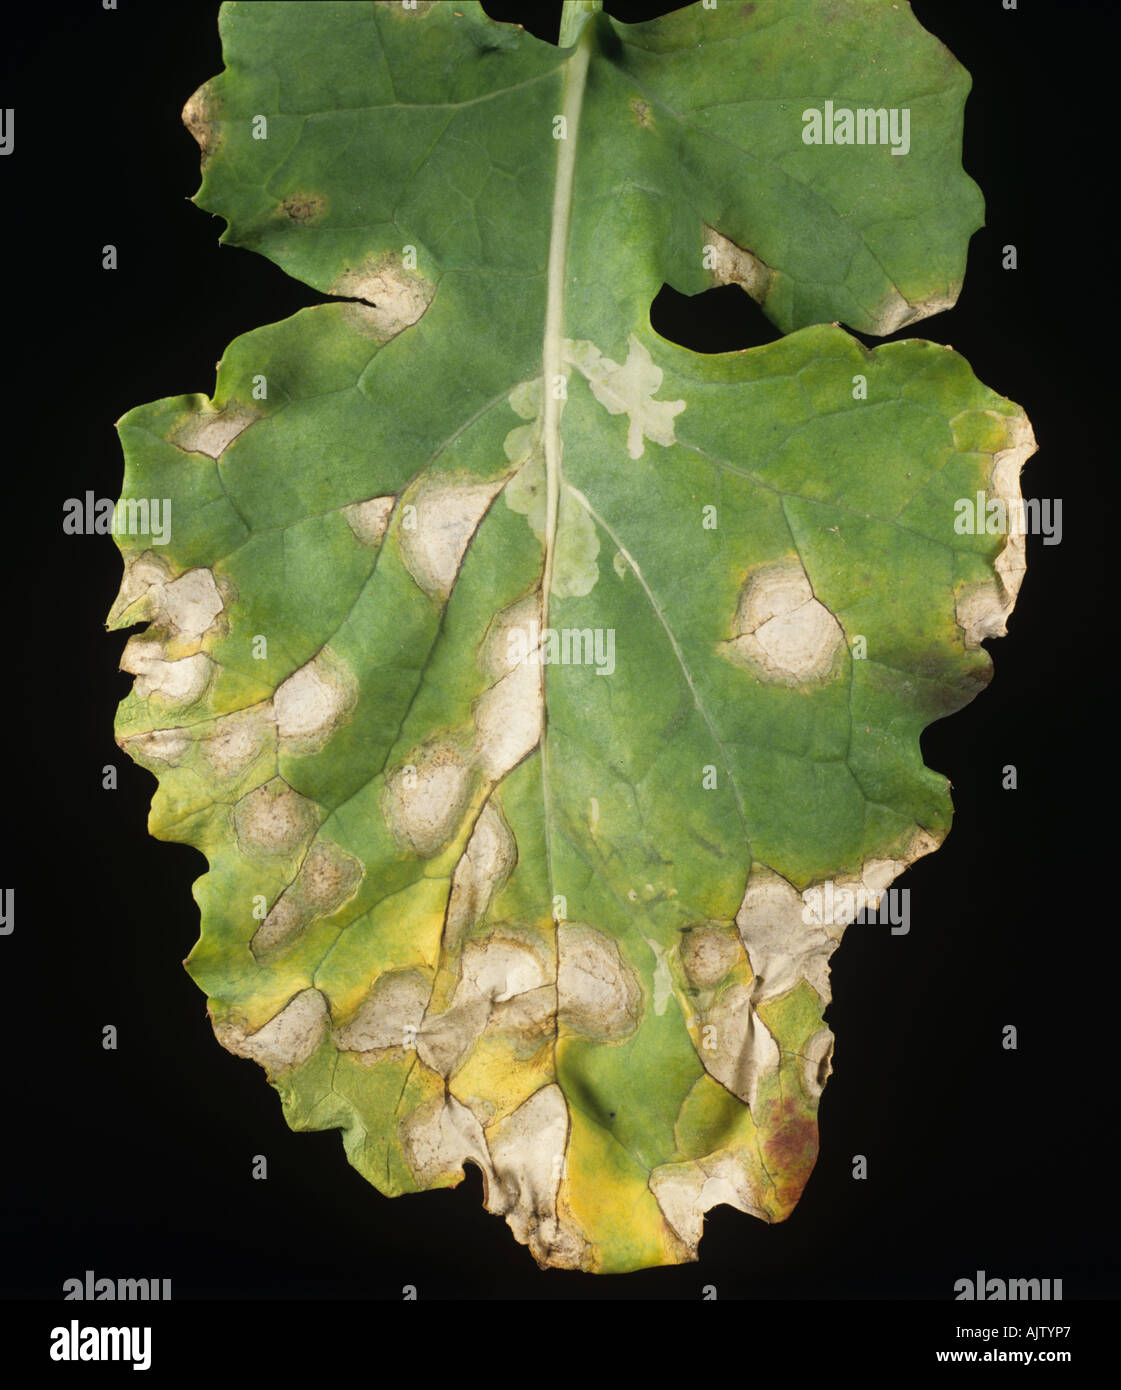 White leaf spot Pseudocercosporella capsellae lesions on a turnip leaf Stock Photo